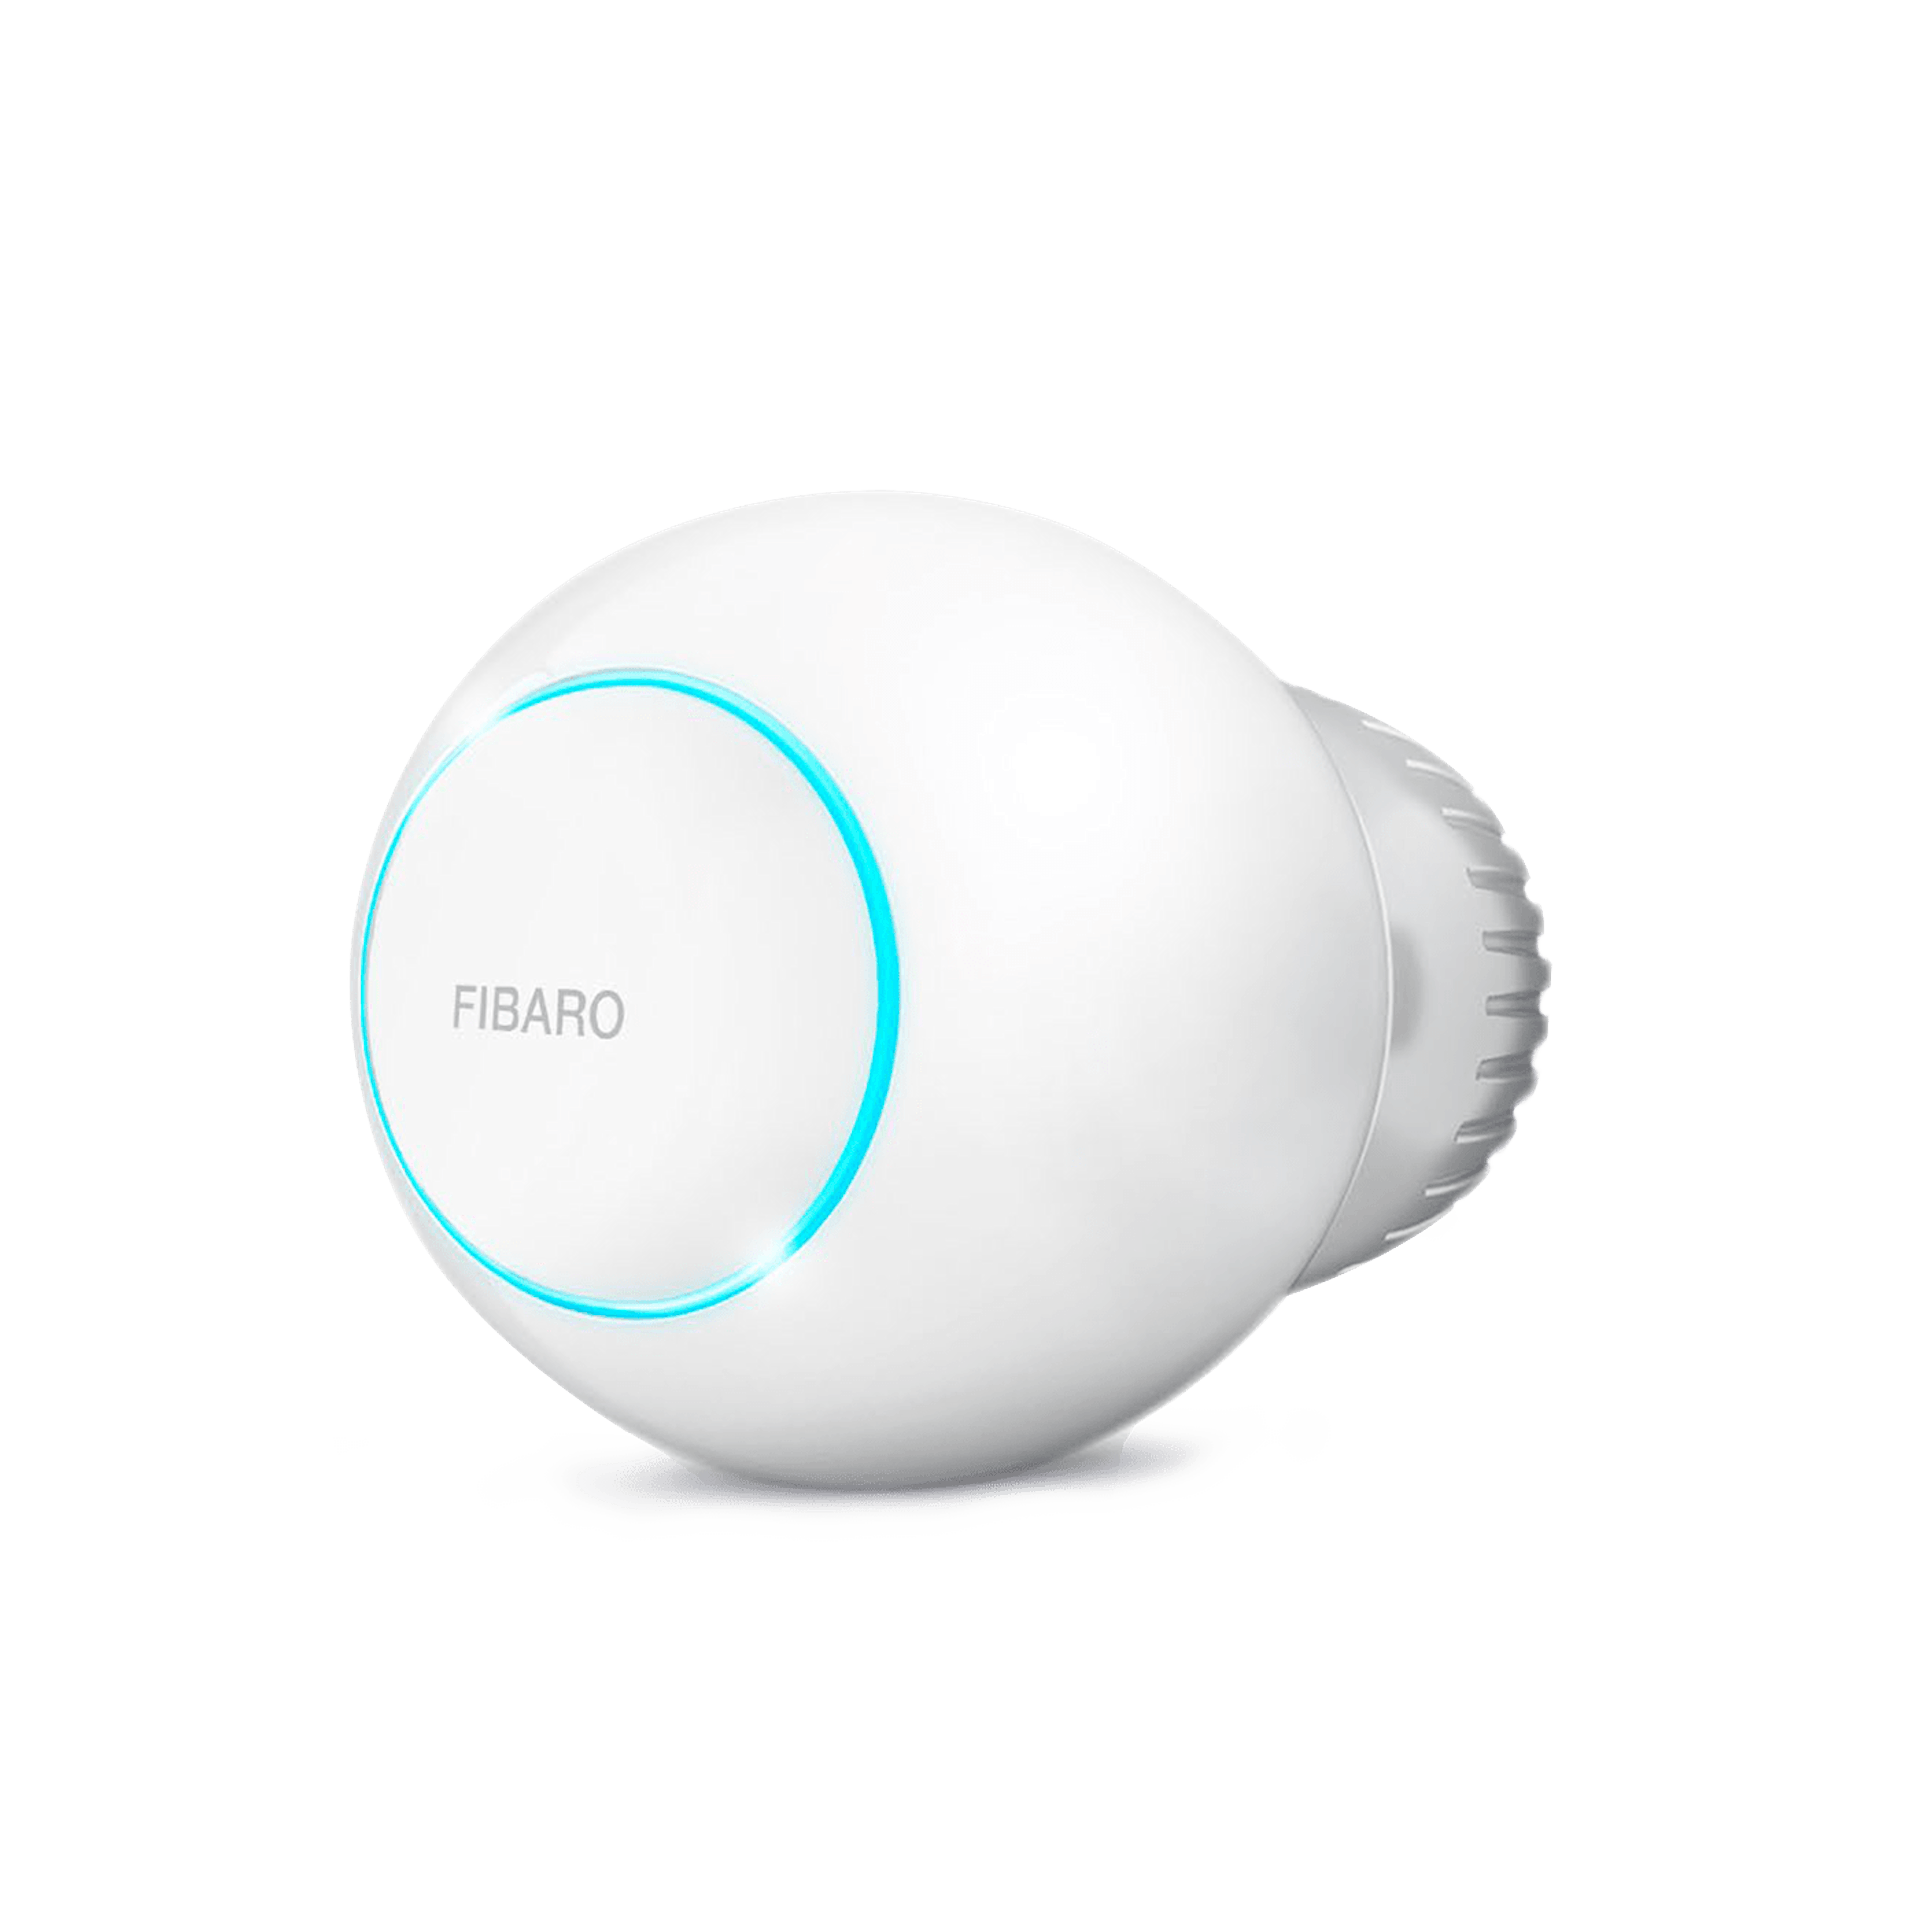 Fibaro – The Heat Controller